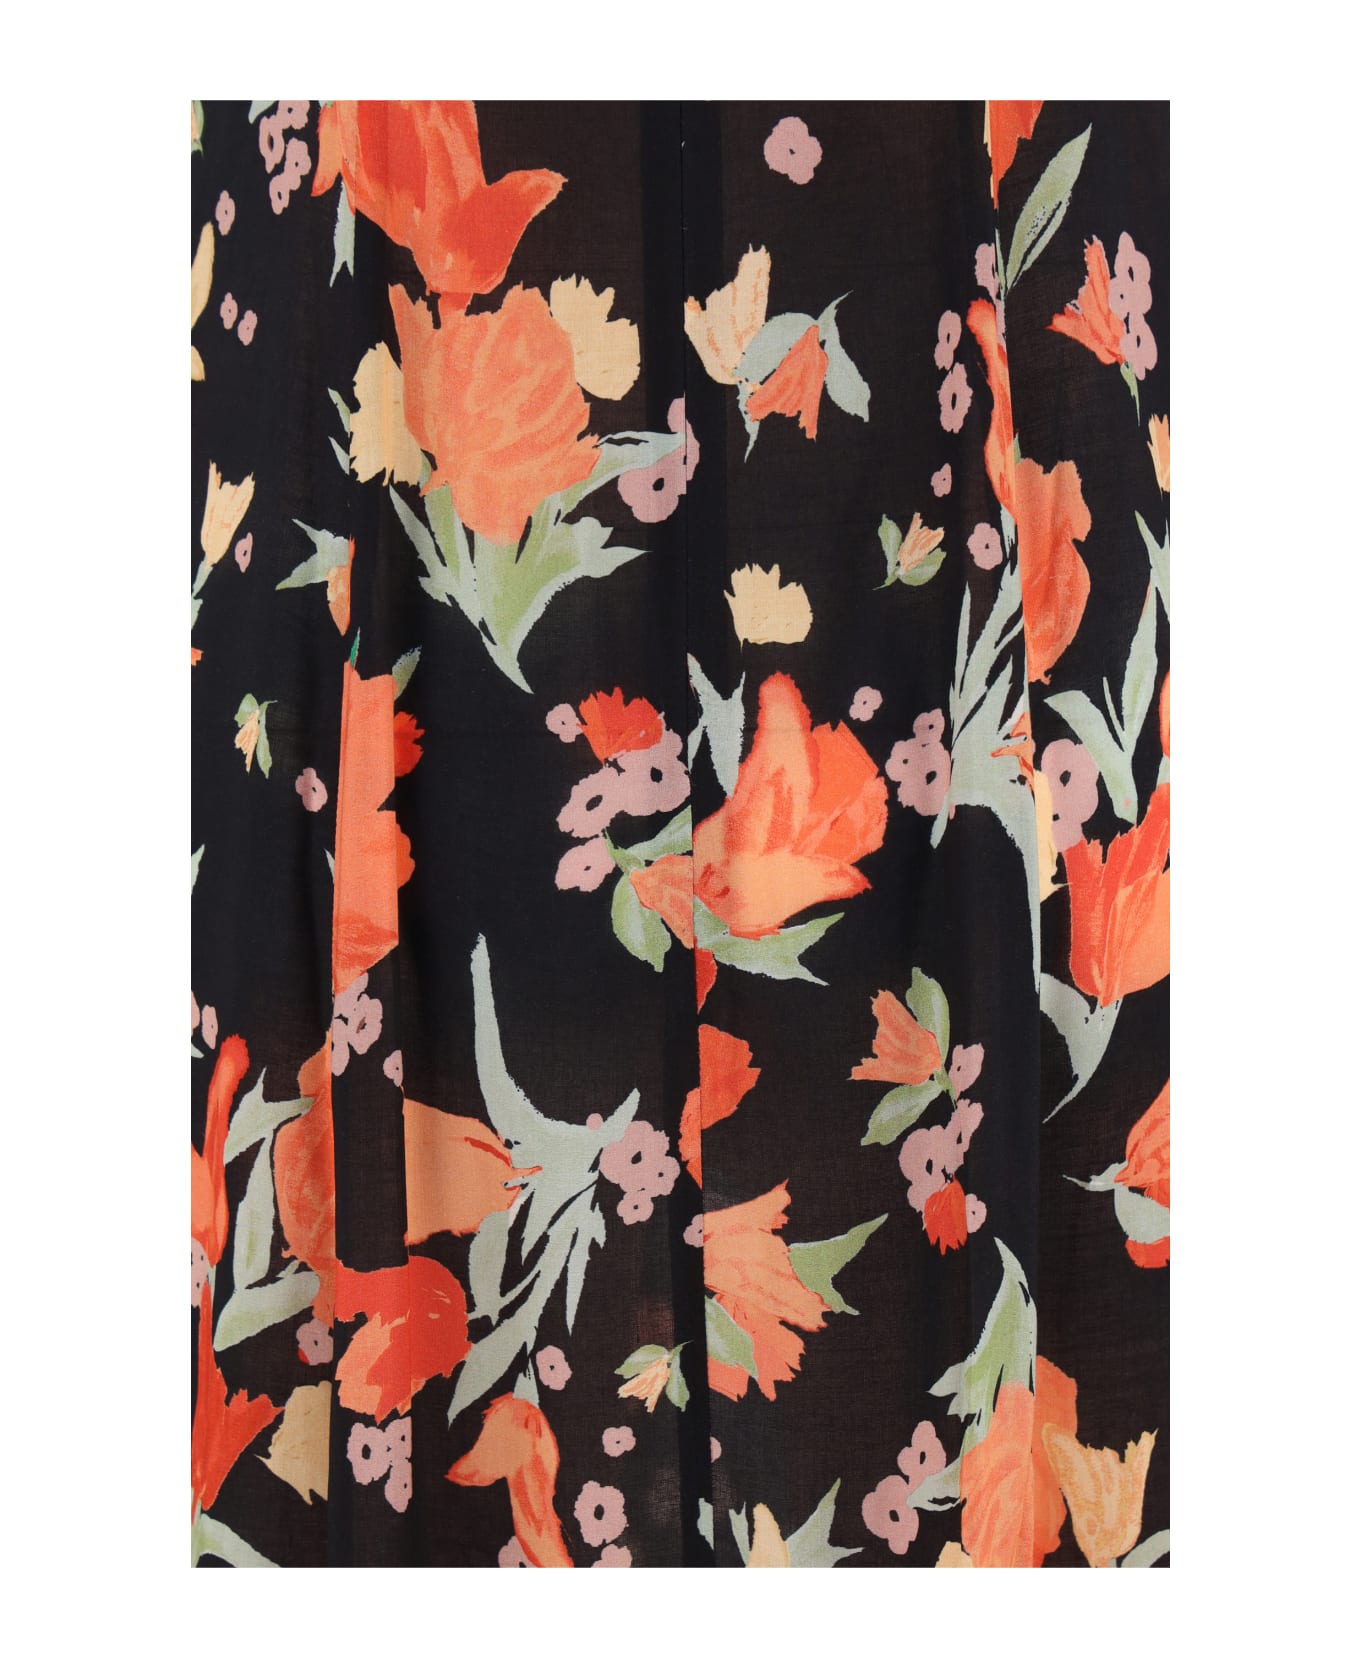 RIXO June Dress - floral top forte forte shirt lemon